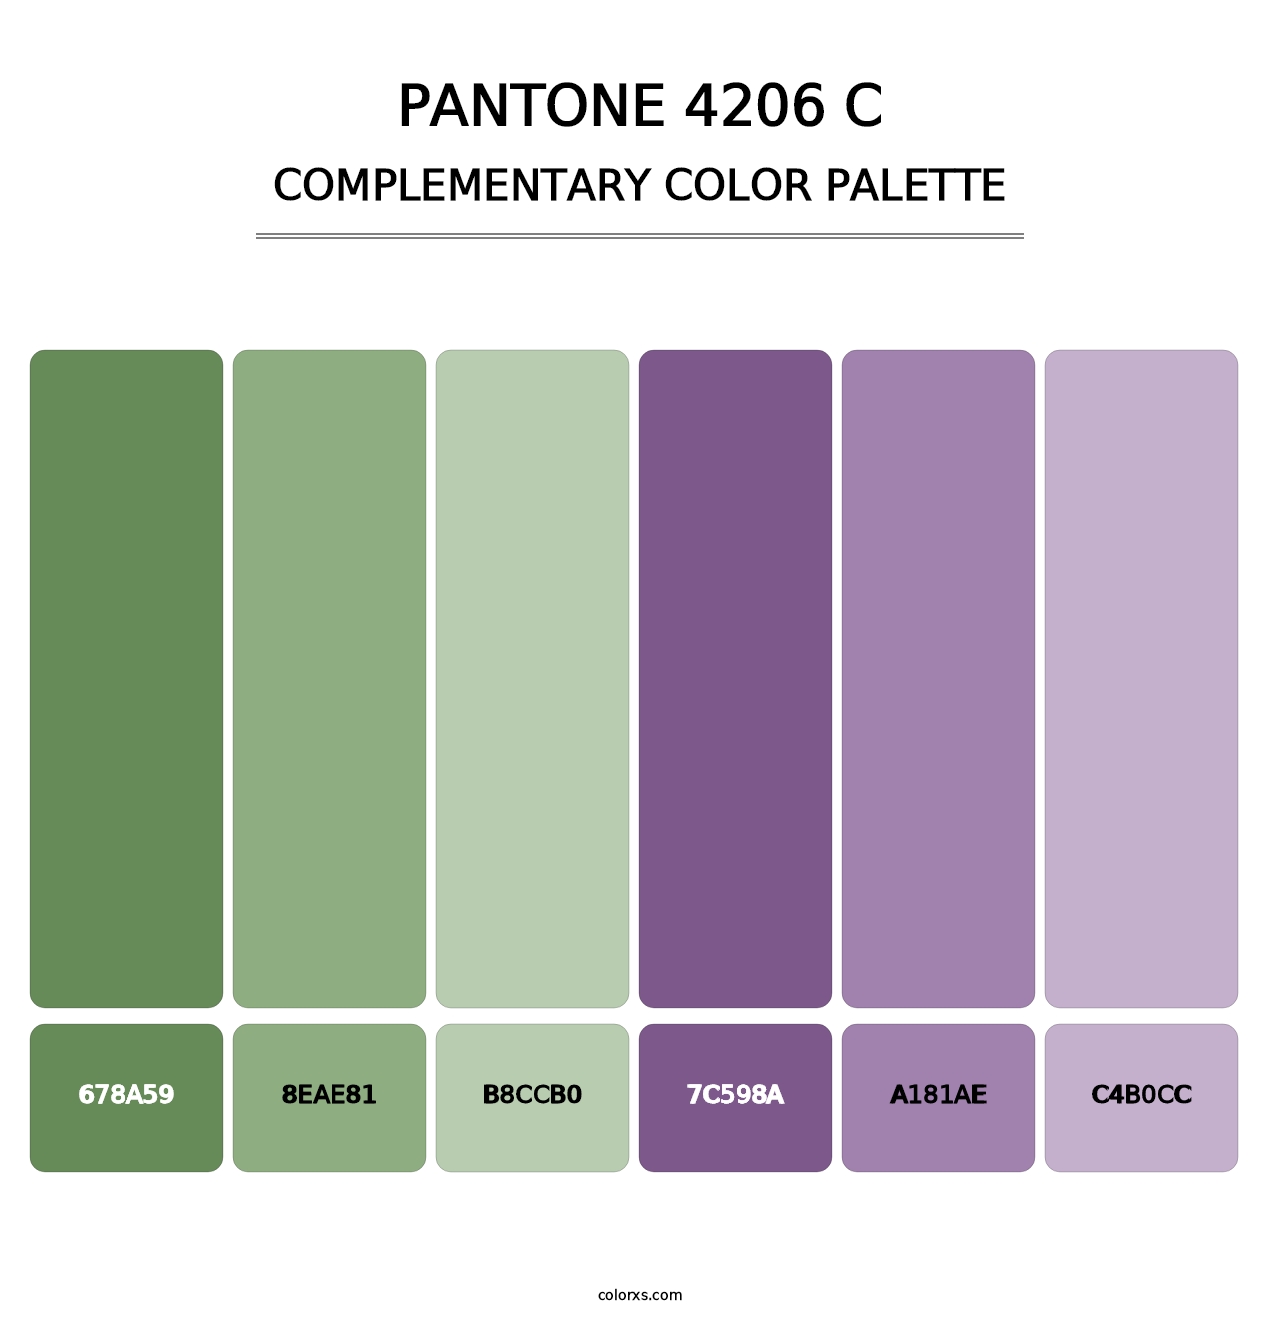 PANTONE 4206 C - Complementary Color Palette